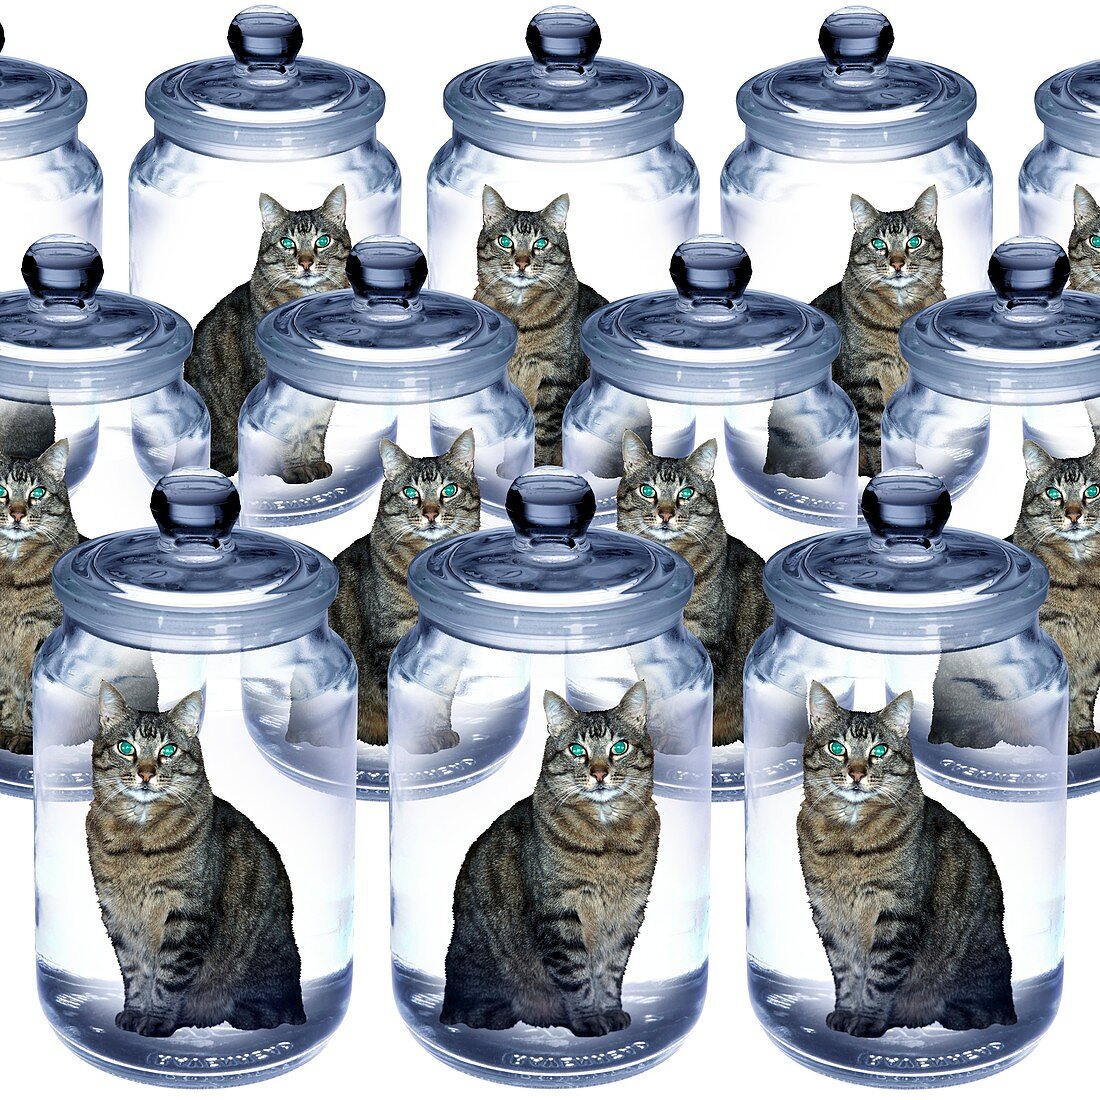 Cloned cats,conceptual image